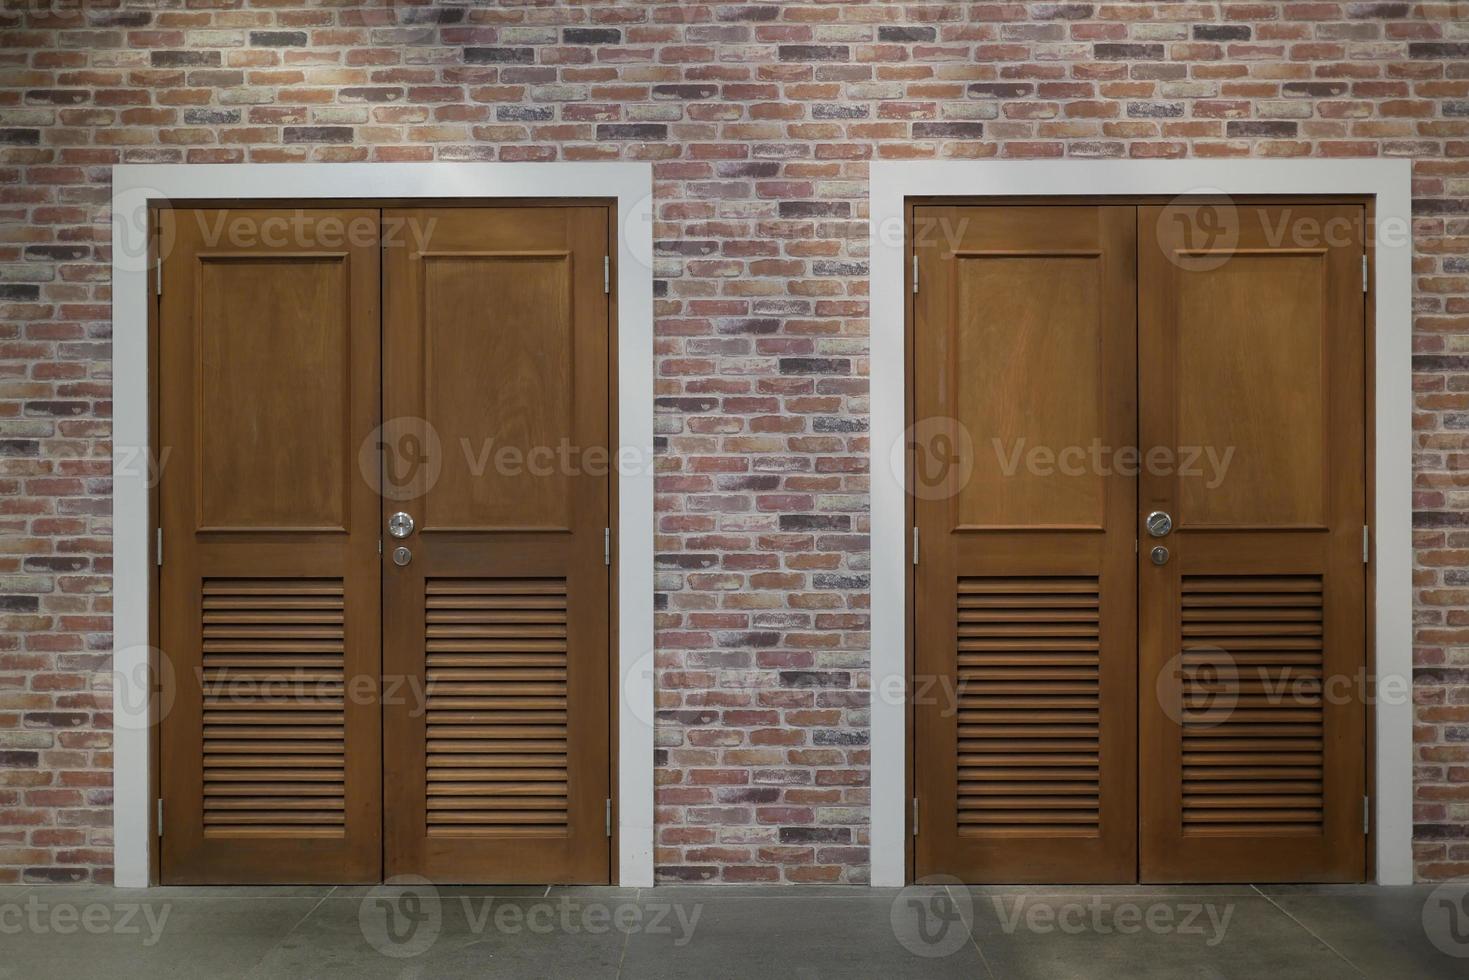 en gammal dörr i brunt trä i singapore foto